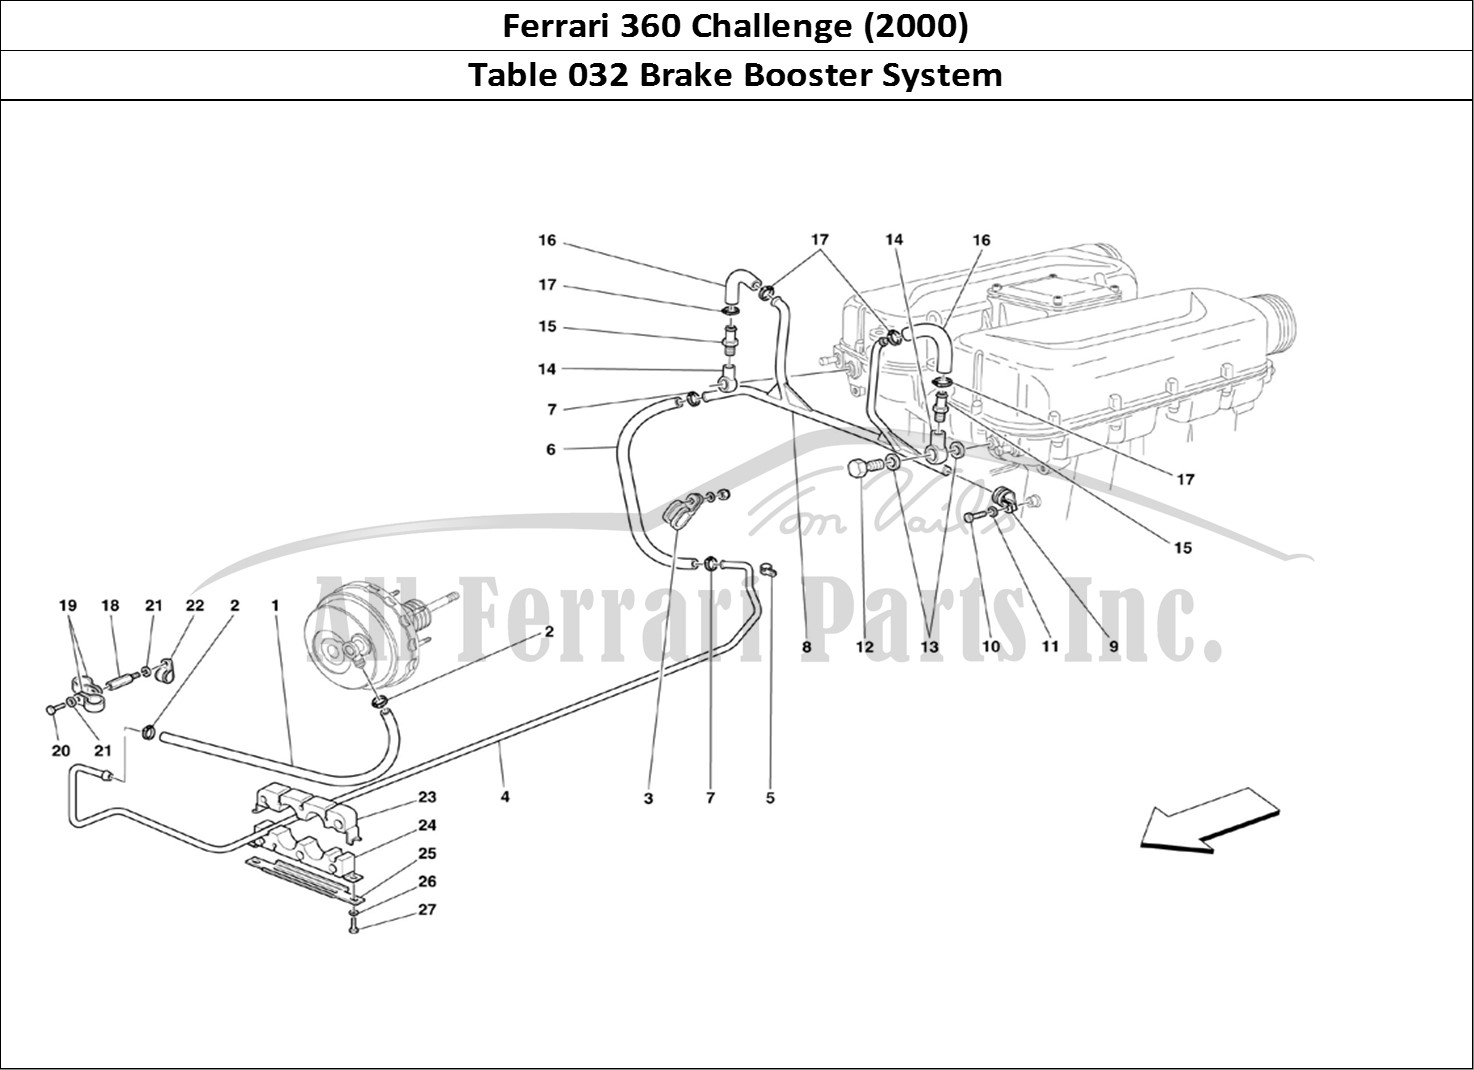 Ferrari Parts Ferrari 360 Challenge (2000) Page 032 Brake Booster System